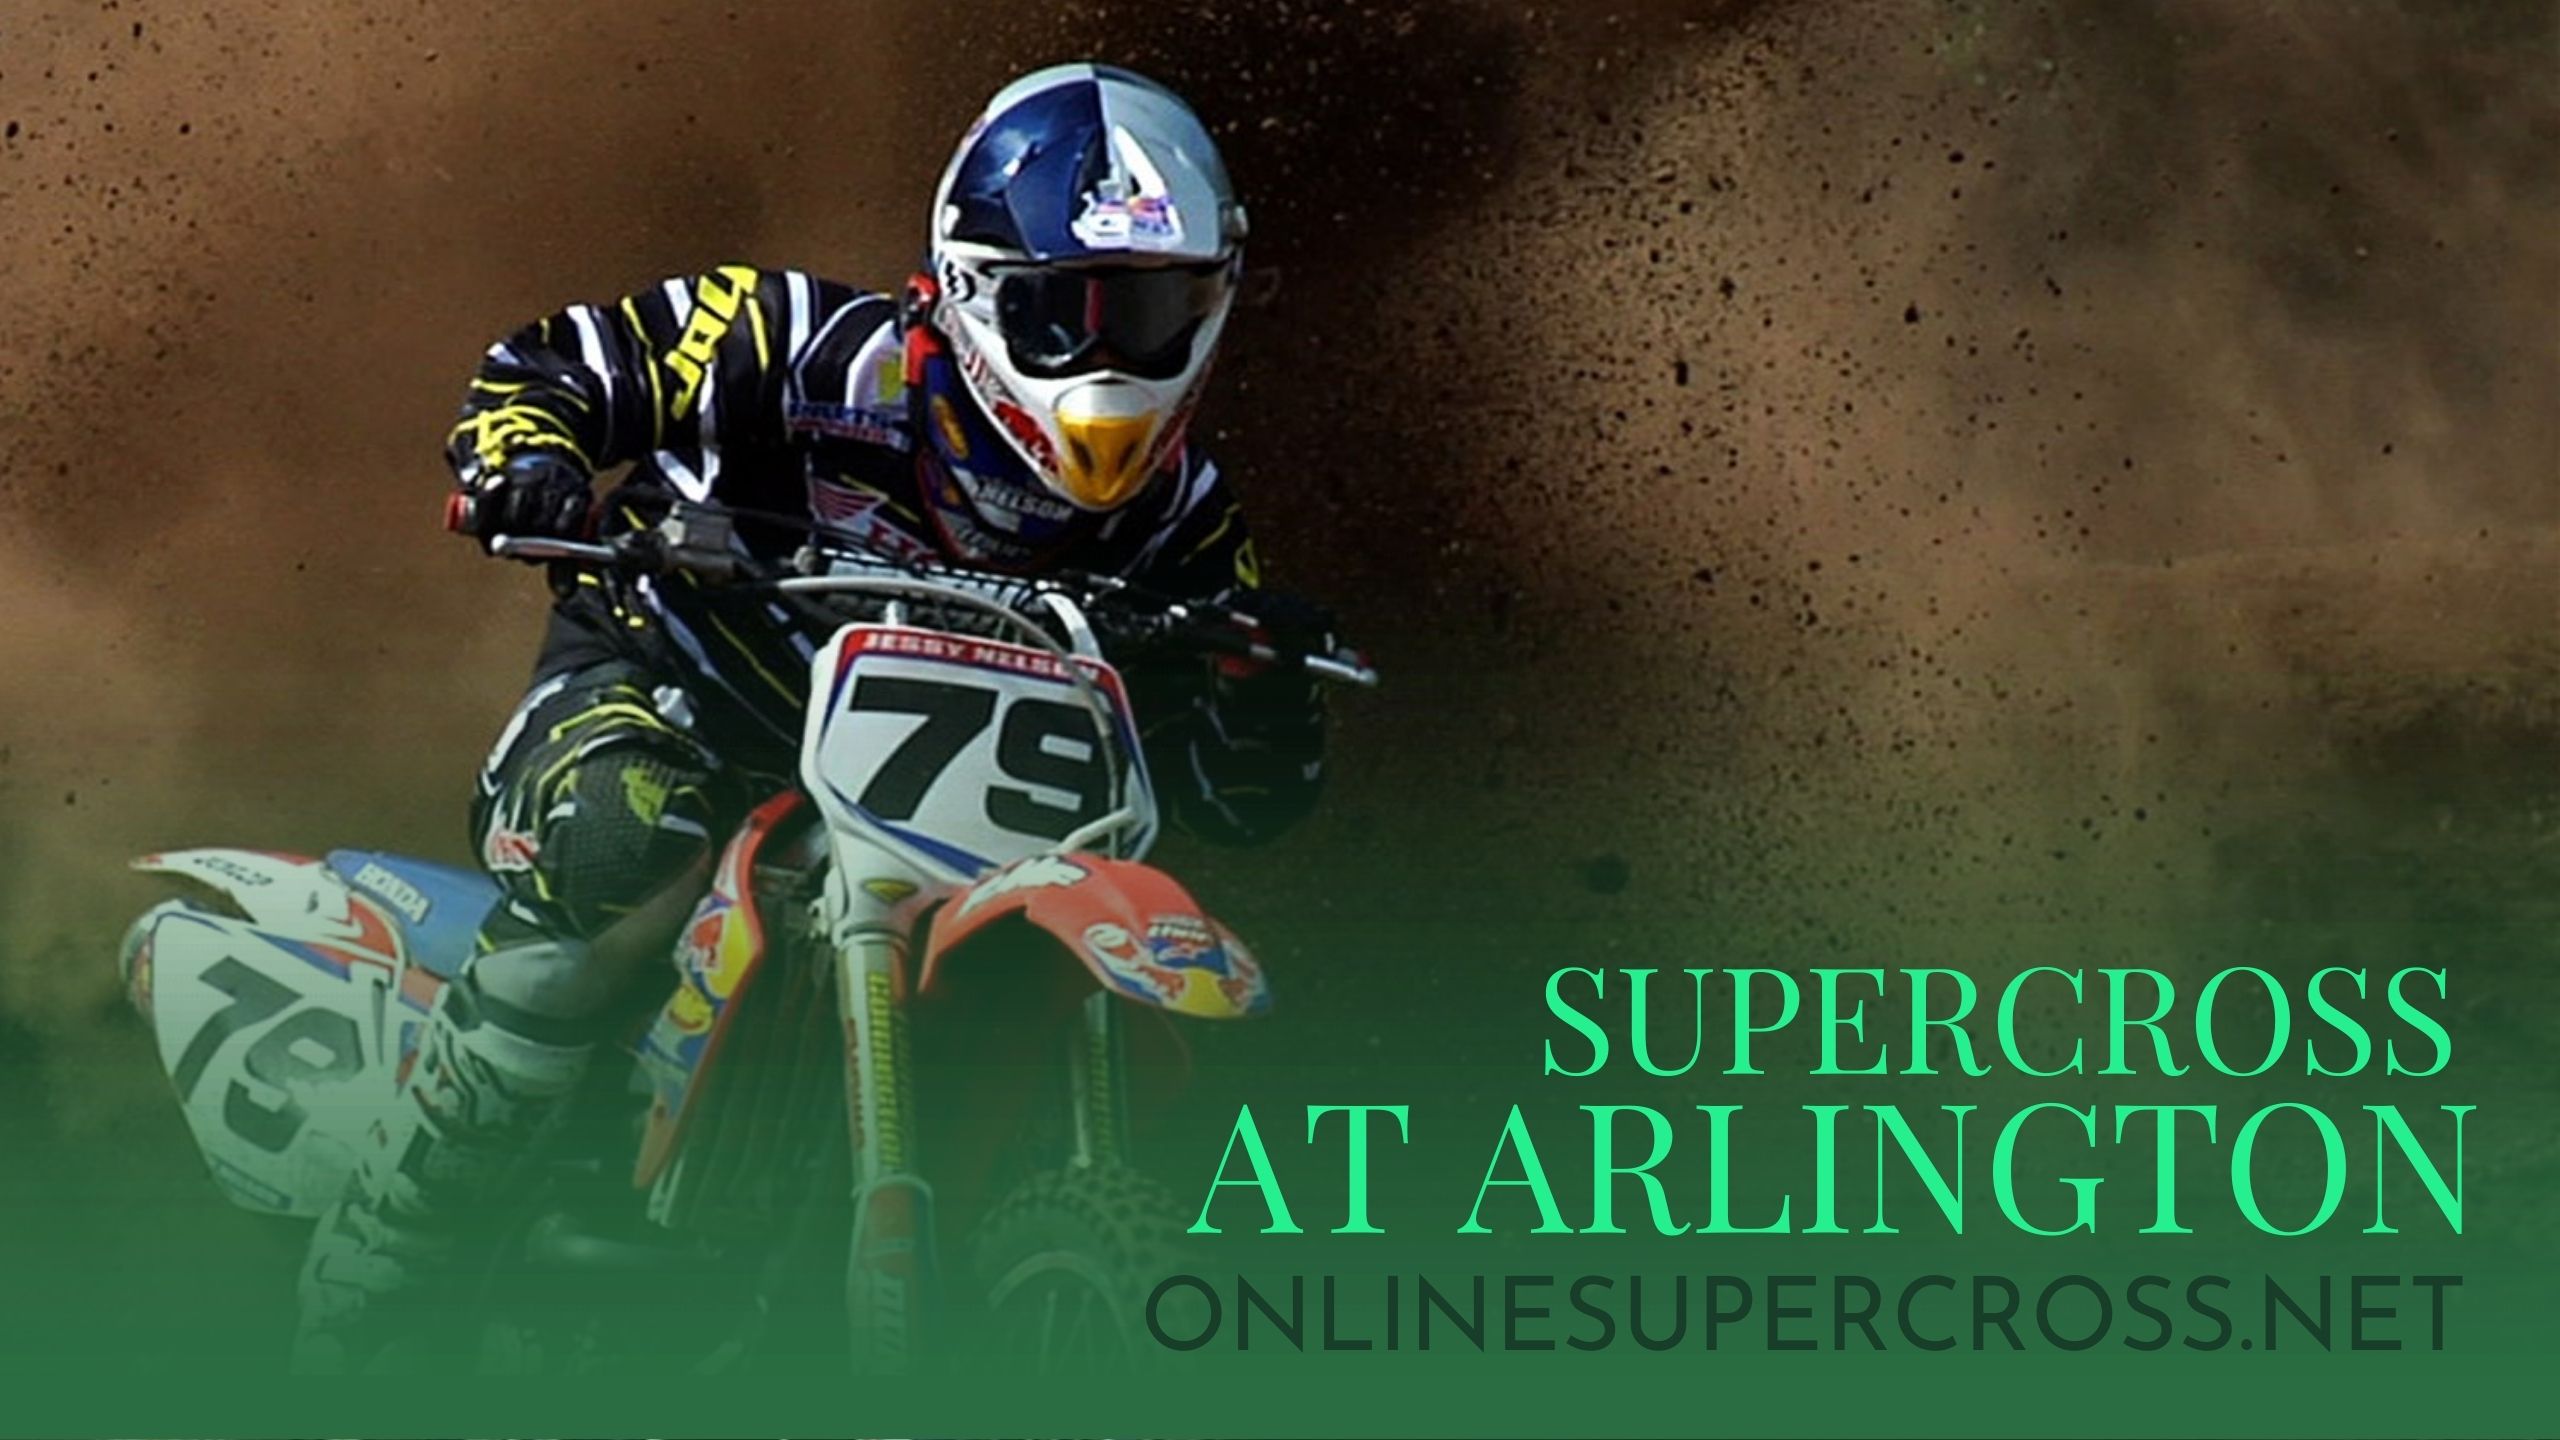 Live Monster Energy AMA Supercross at Arlington Online